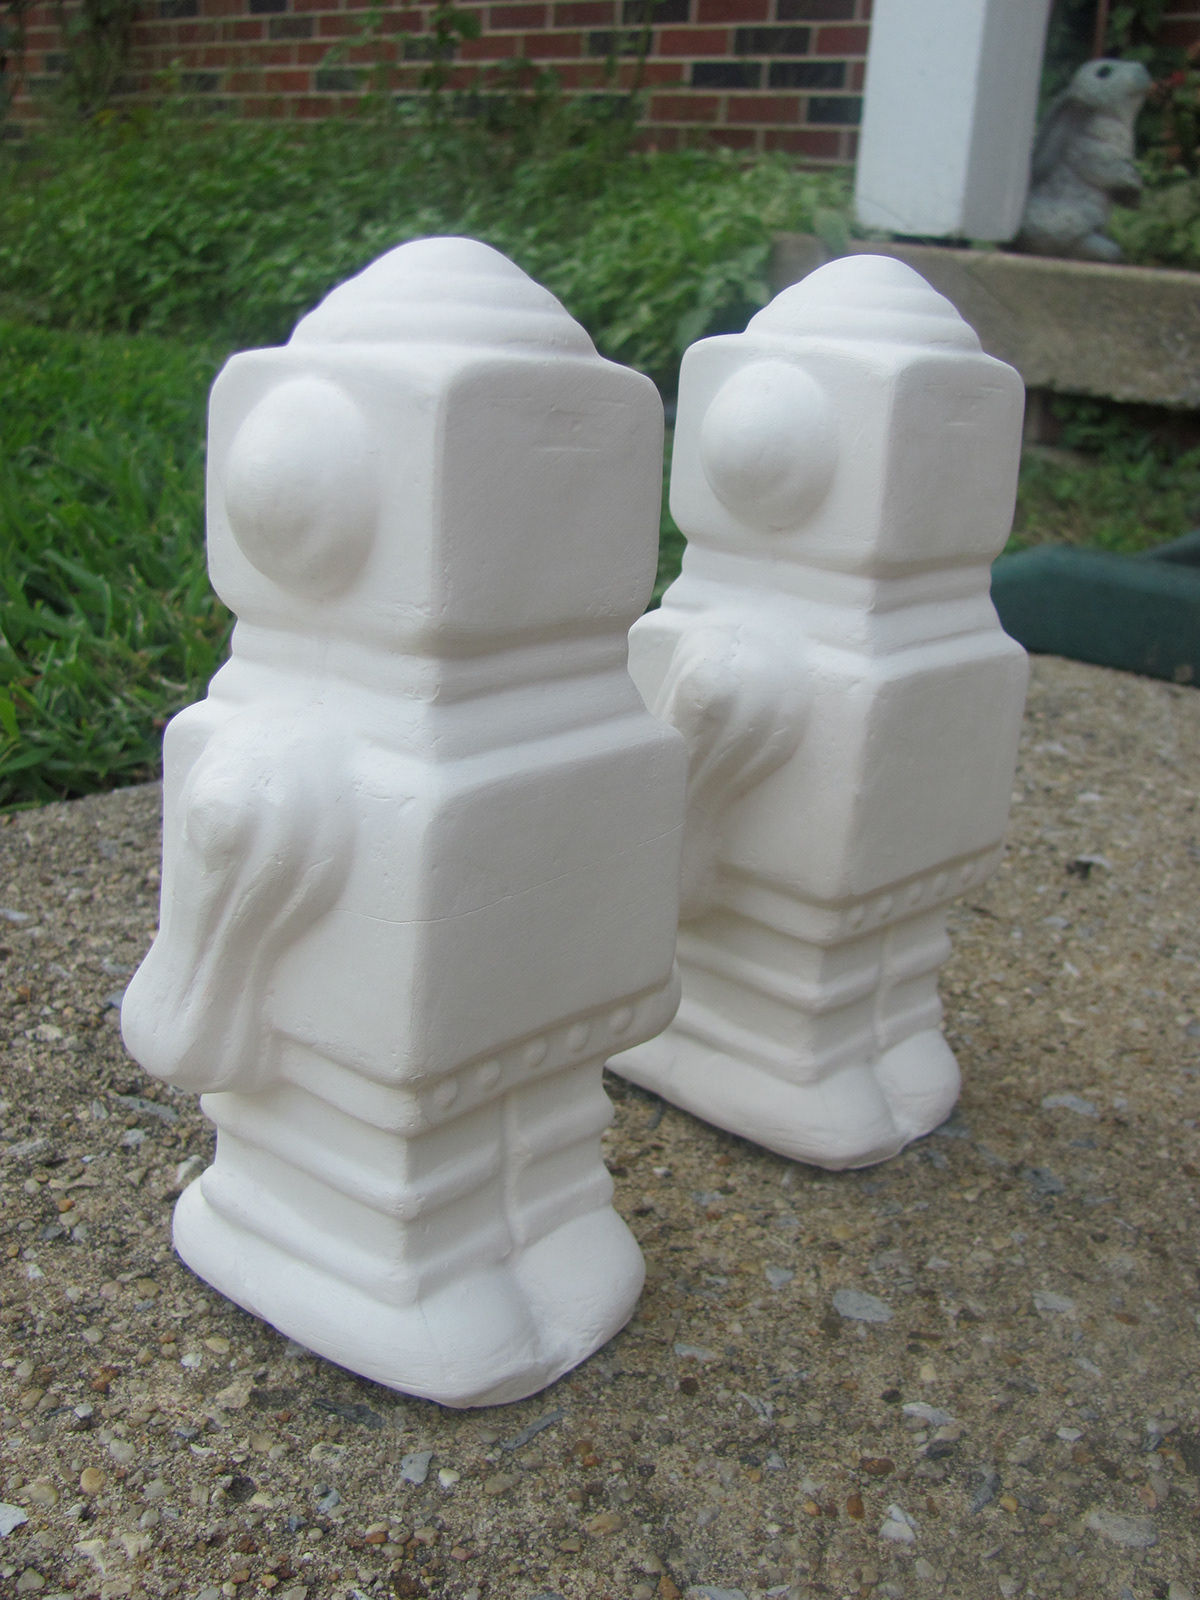 robot toy ceramic